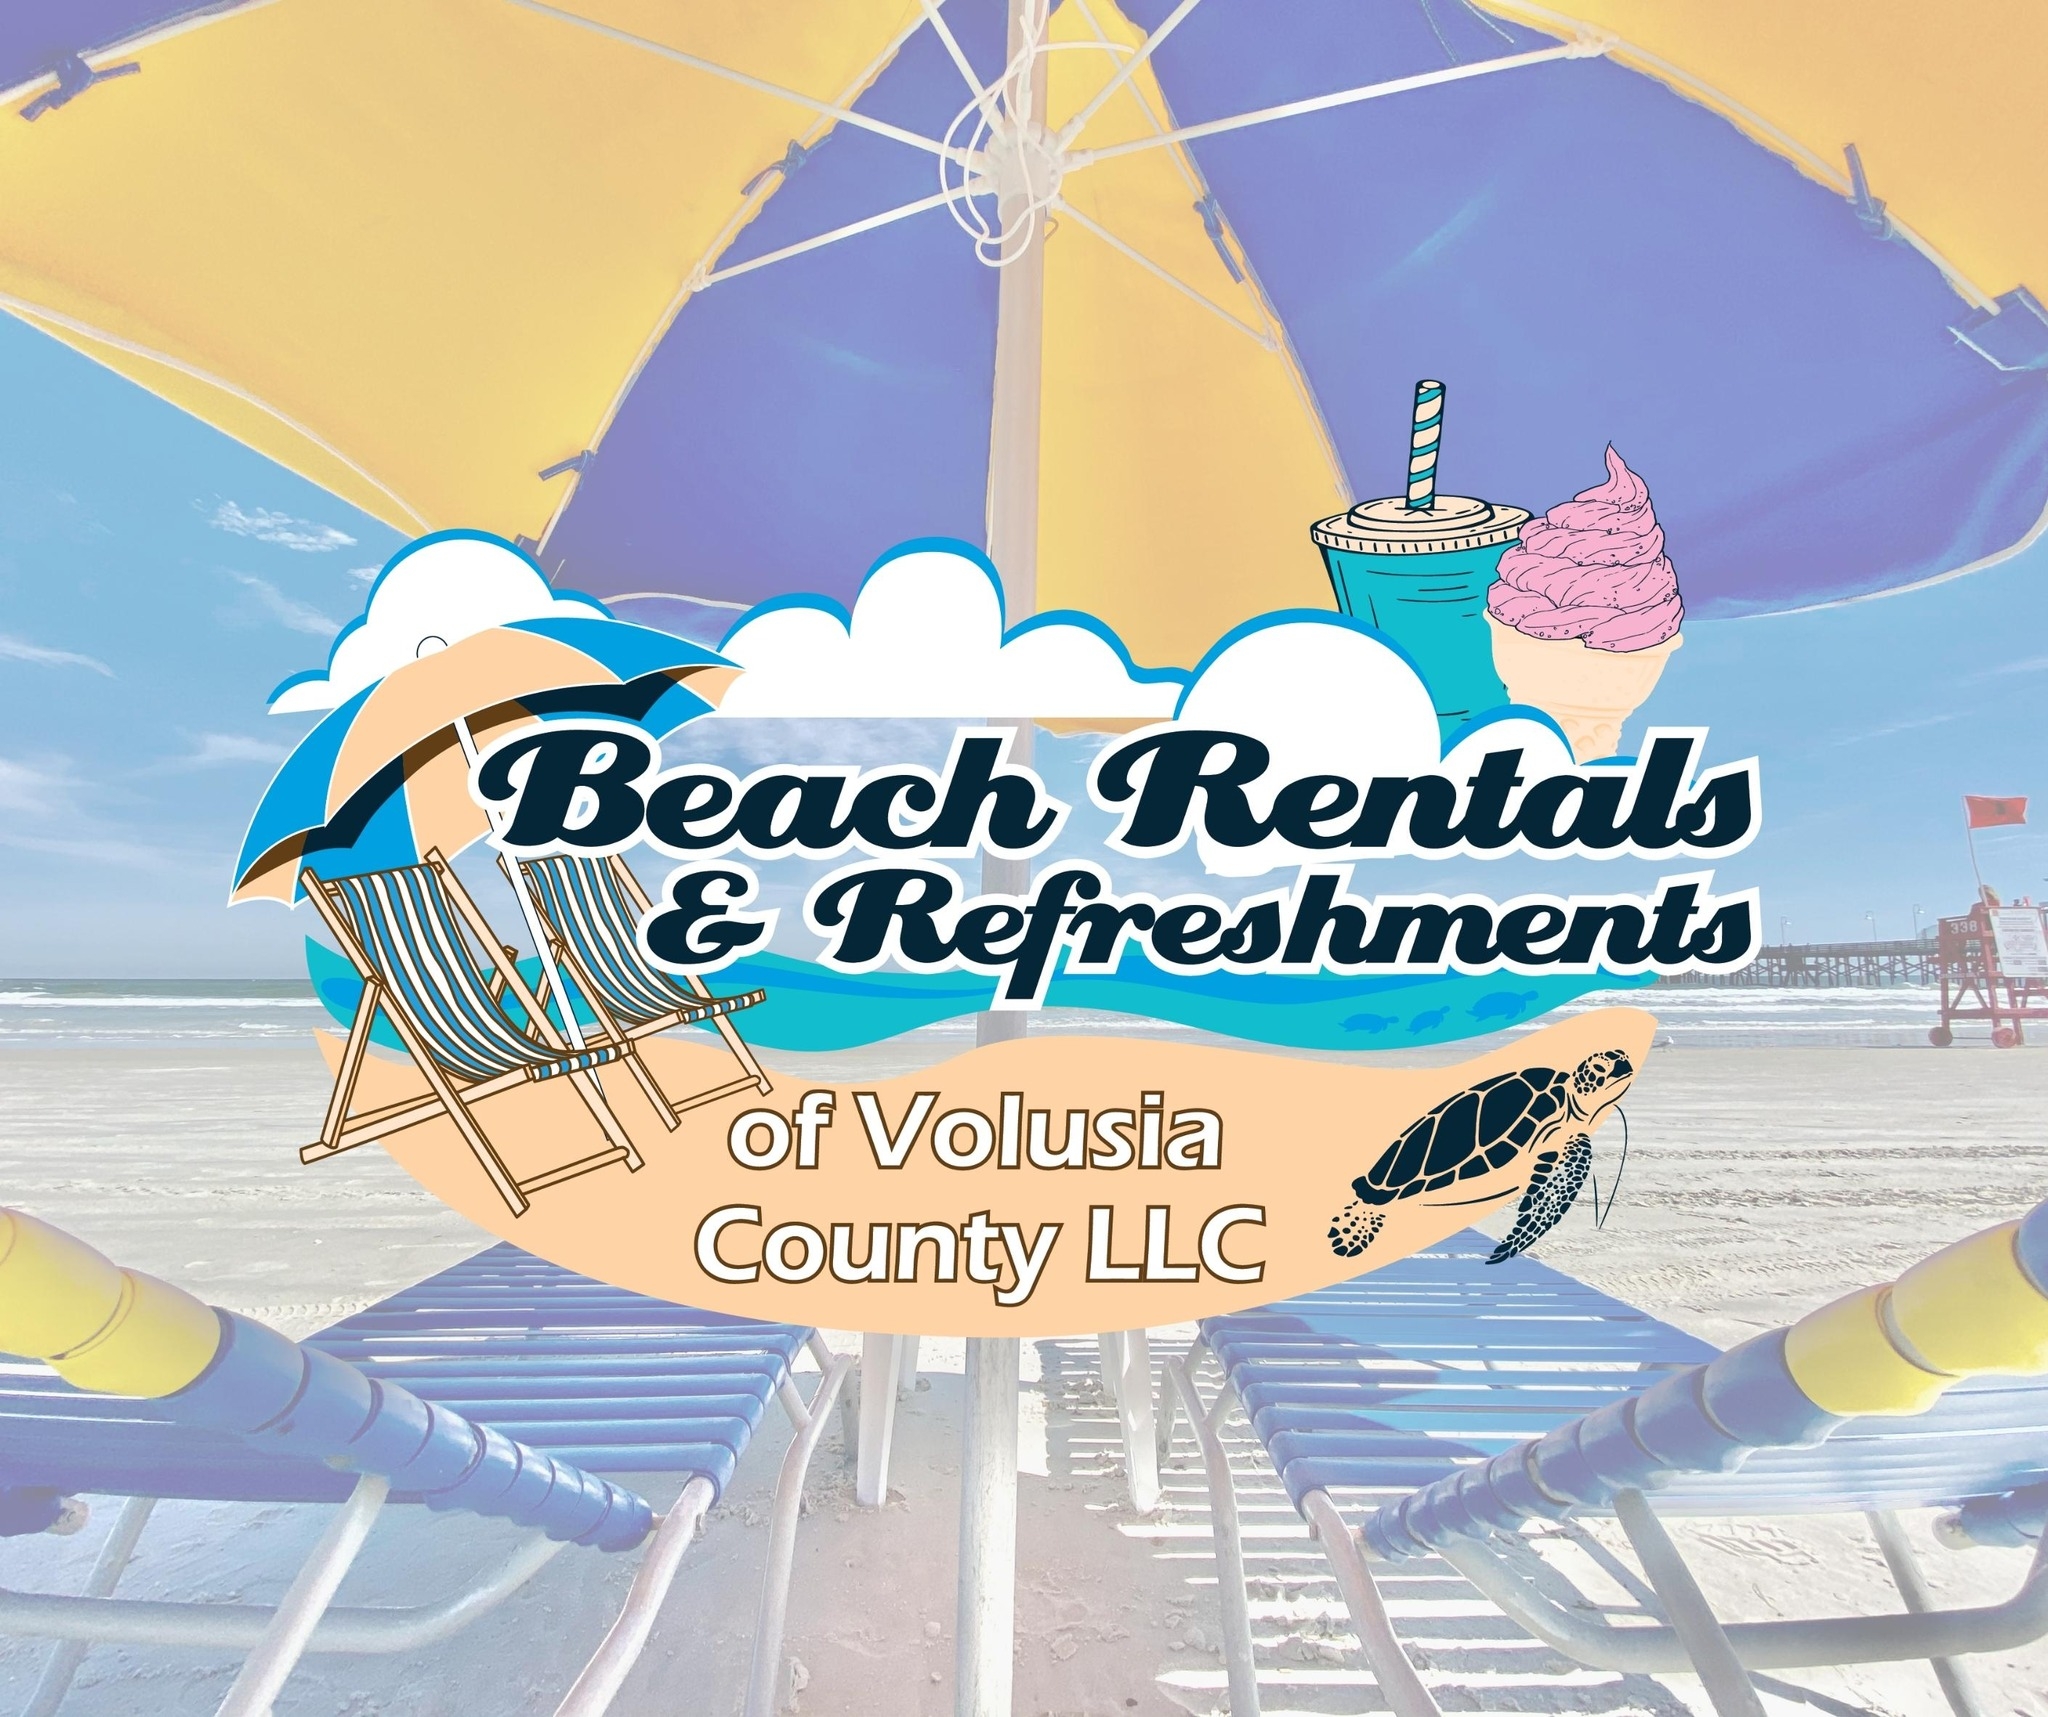 Beach Rentals & Refreshments of Volusia County, LLC